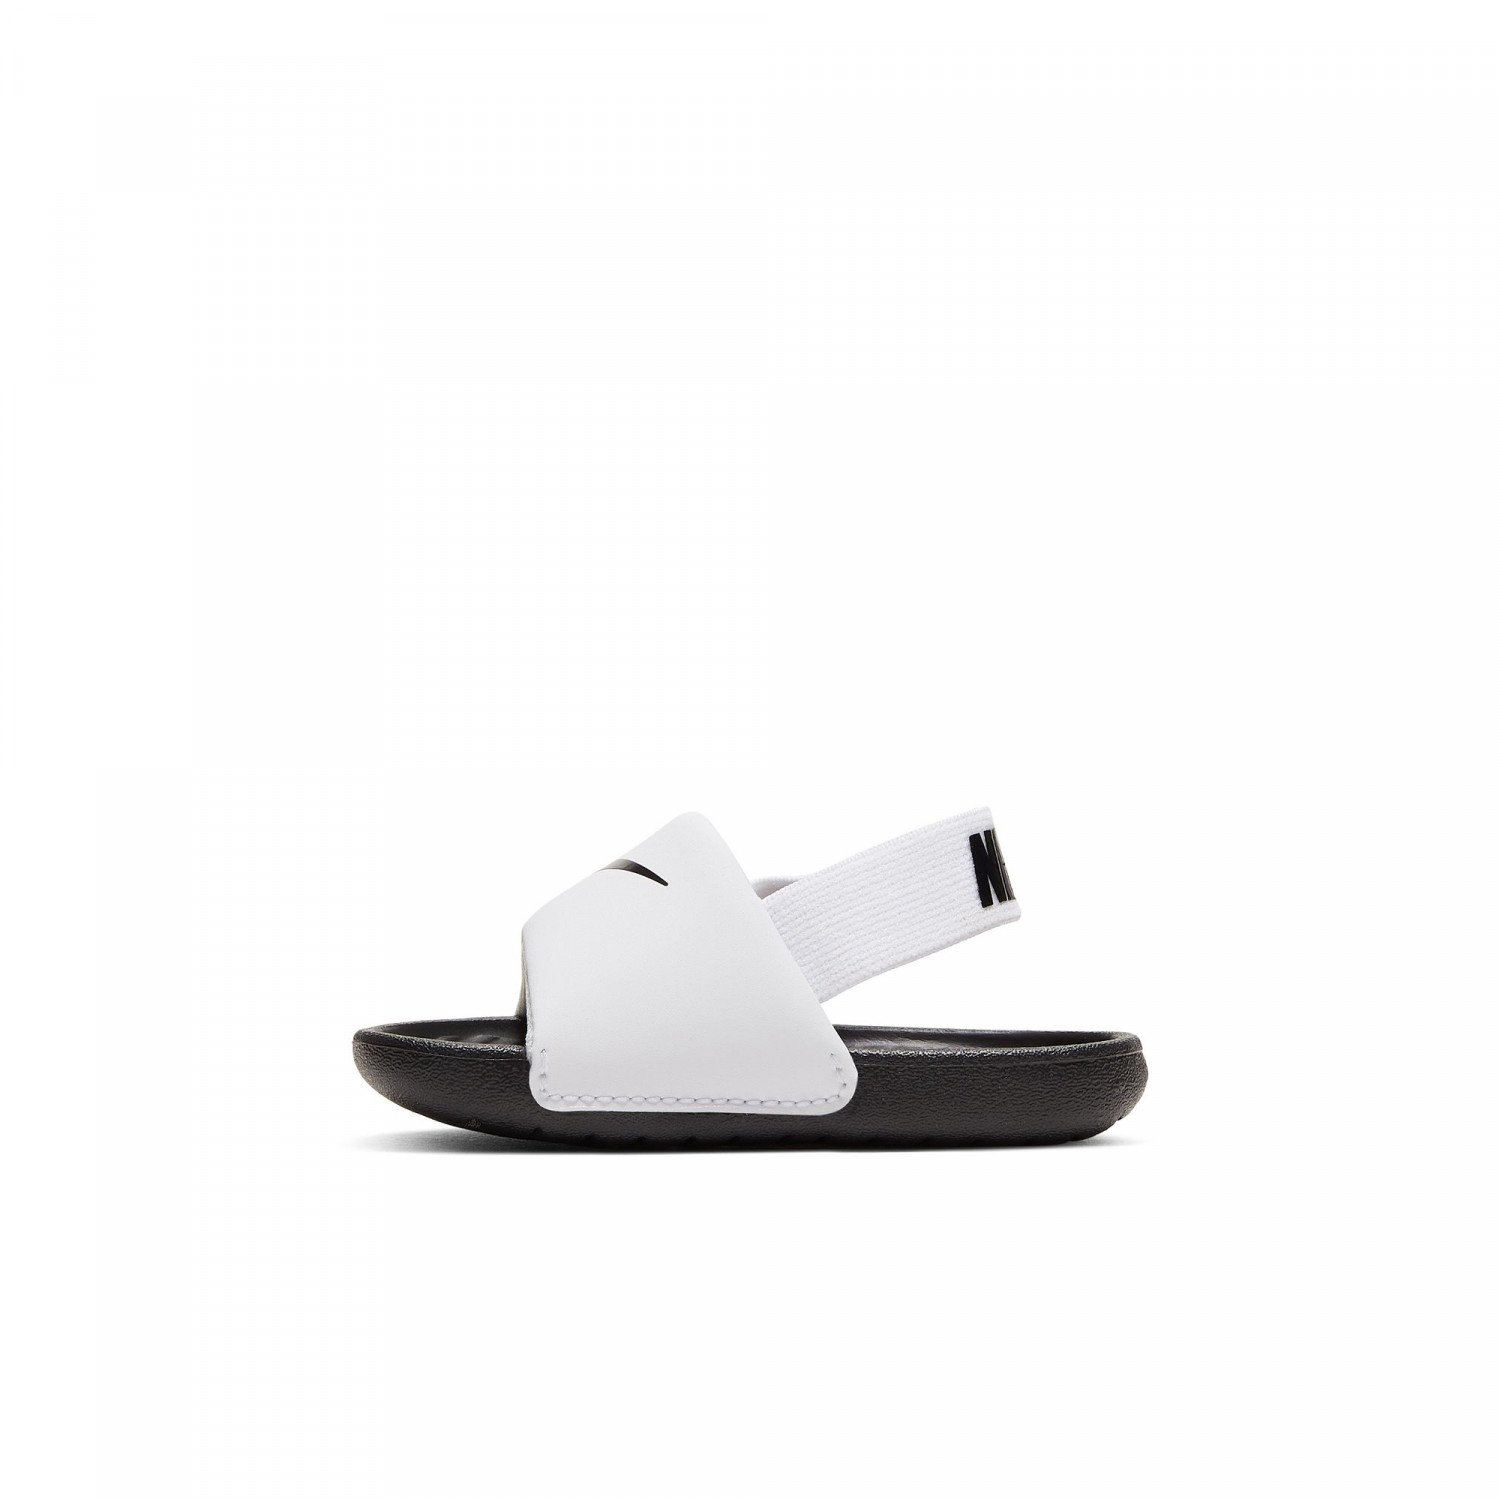 Sandales bébé Nike Kawa blanc noir sur